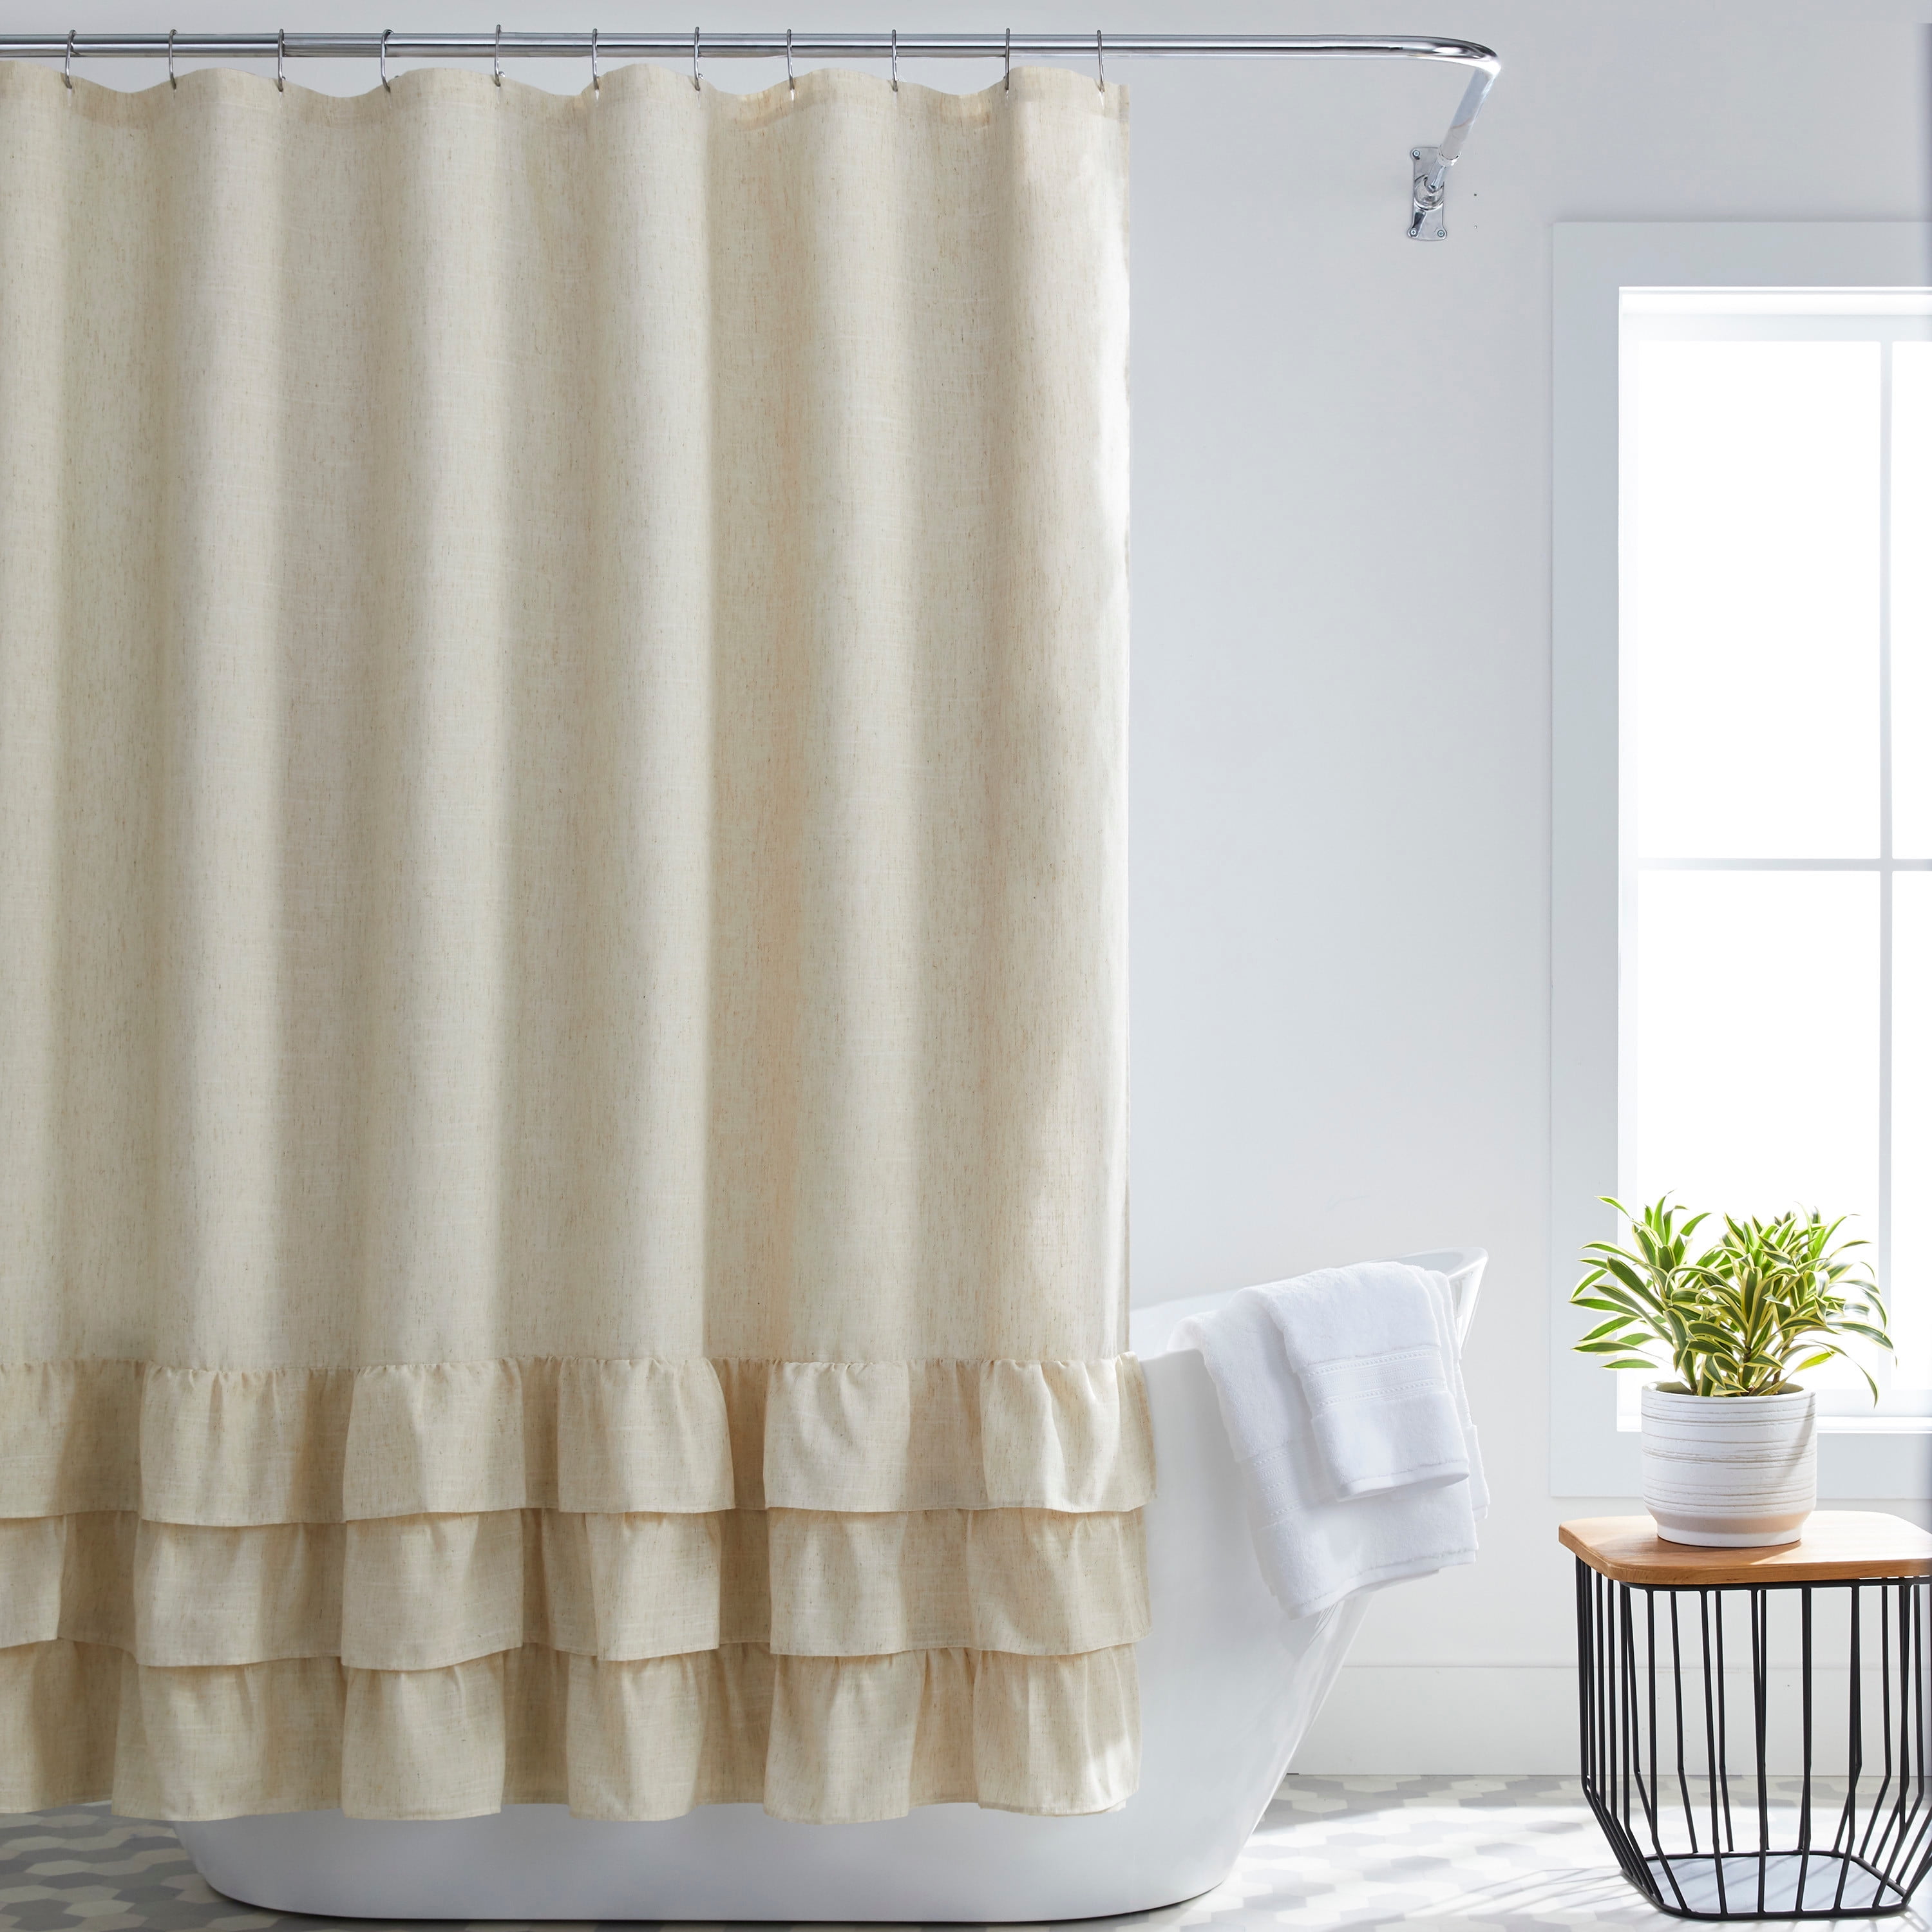 Garden with Flow Water Bathroom Fabric Shower Curtain Liner Polyester Bath Mat 